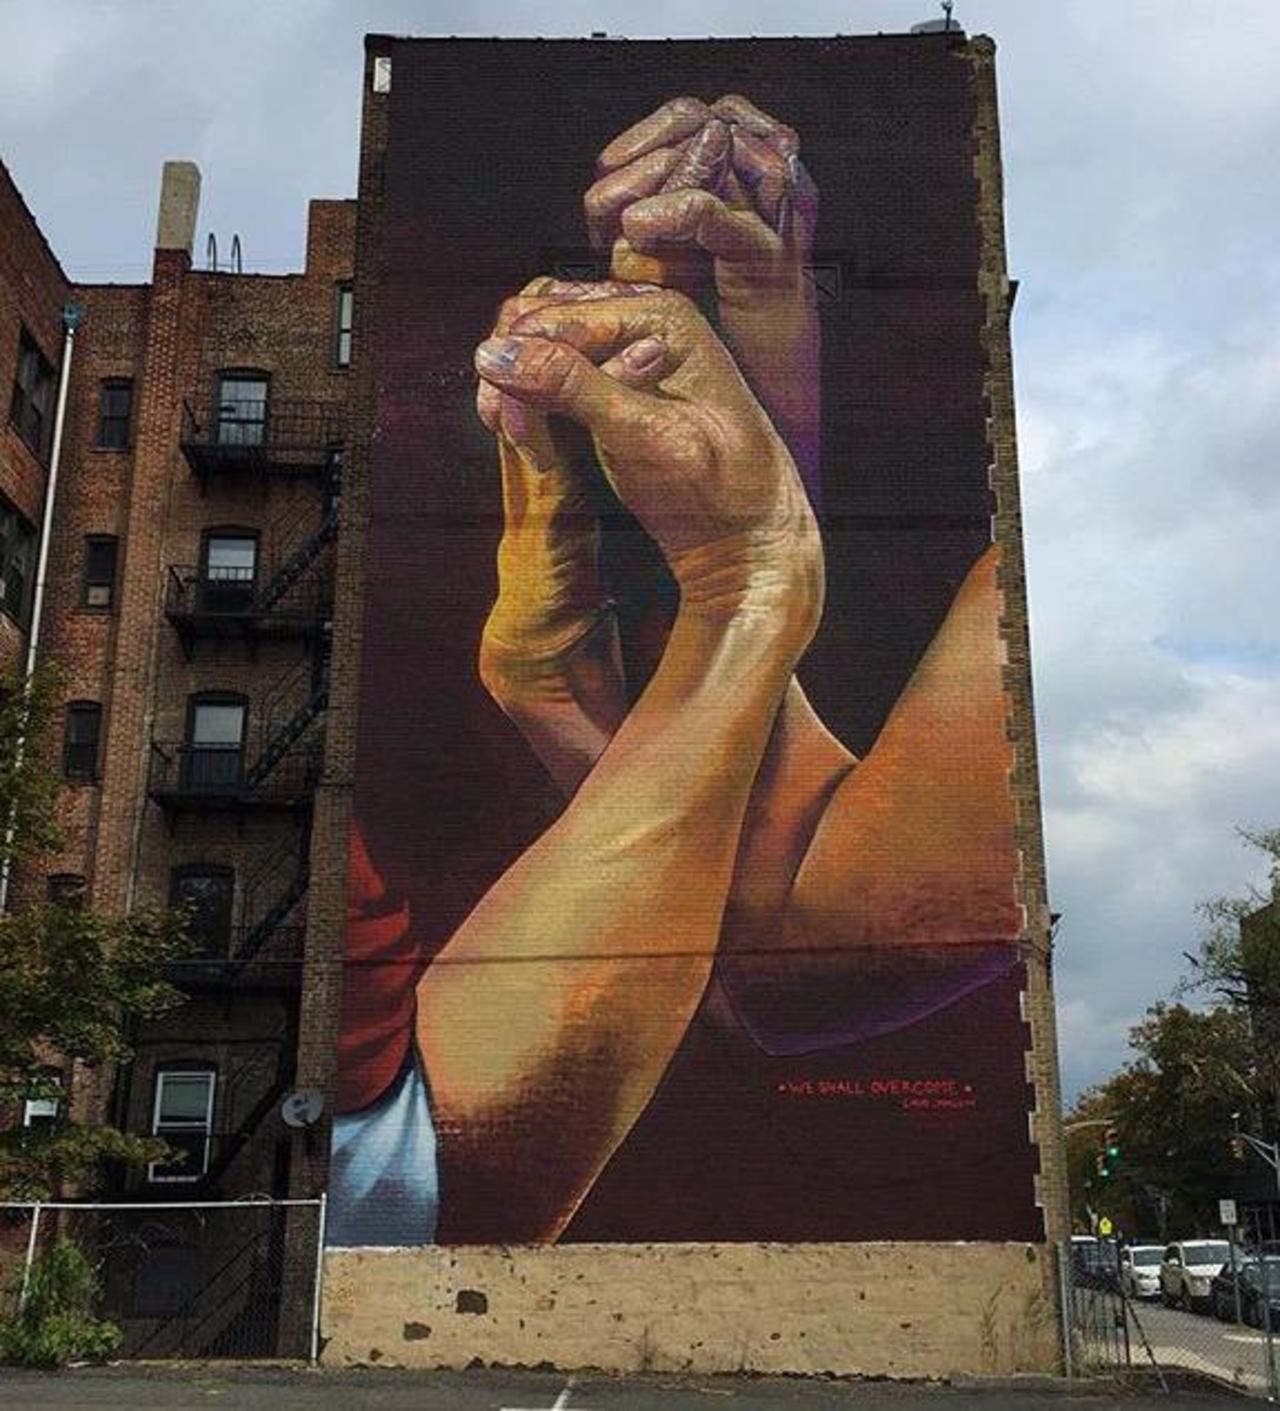 New Street Art by CaseMaclaim in Jersey City for the TheBKcollective 

#art #graffiti #mural #streetart http://t.co/j4e3ZExkBg